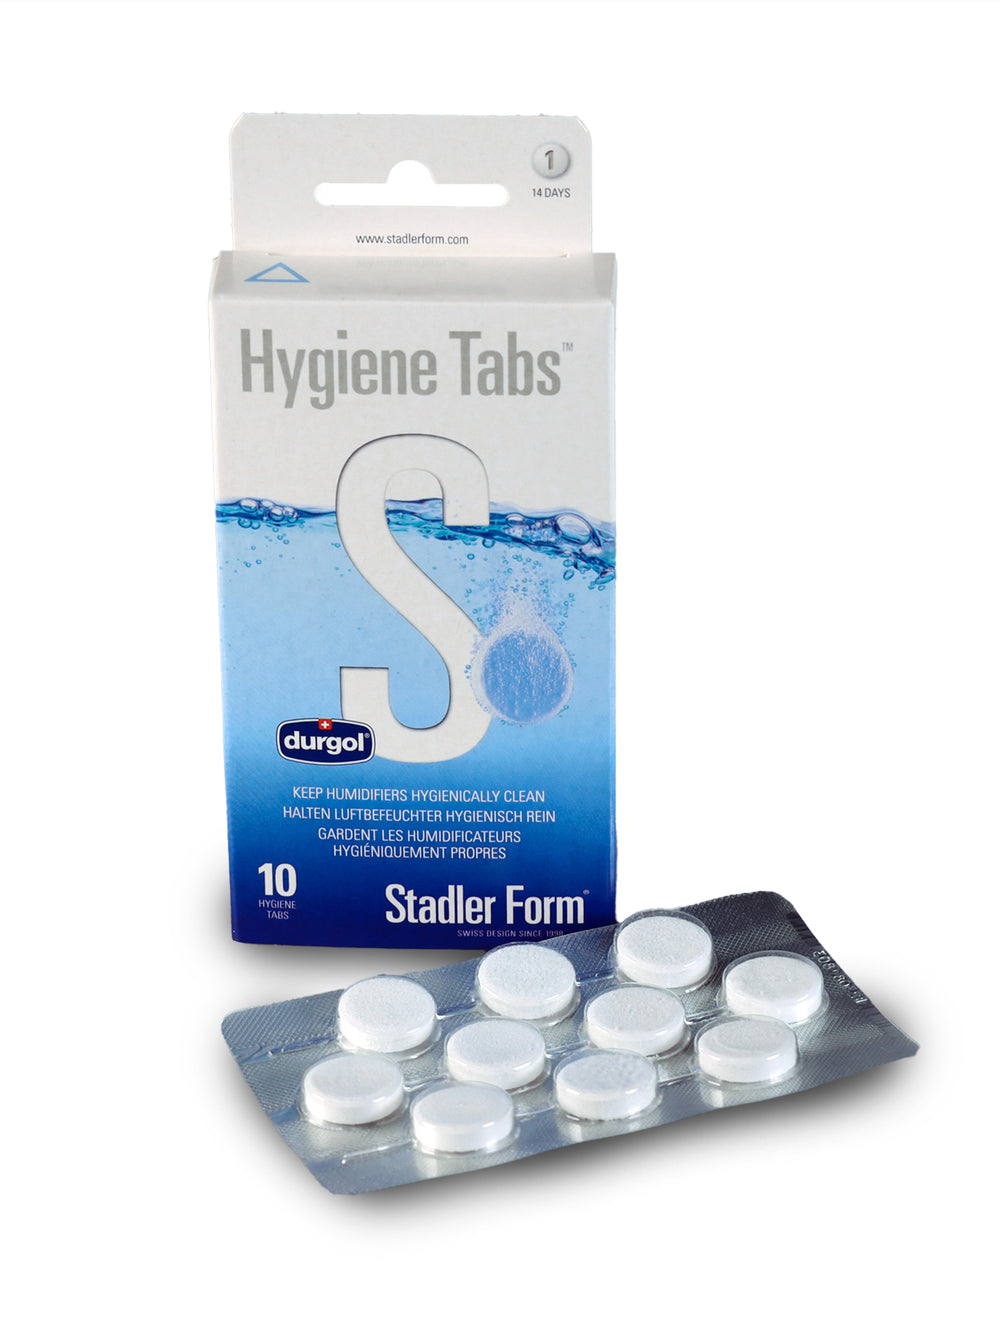 NEW: Hygiene Tabs